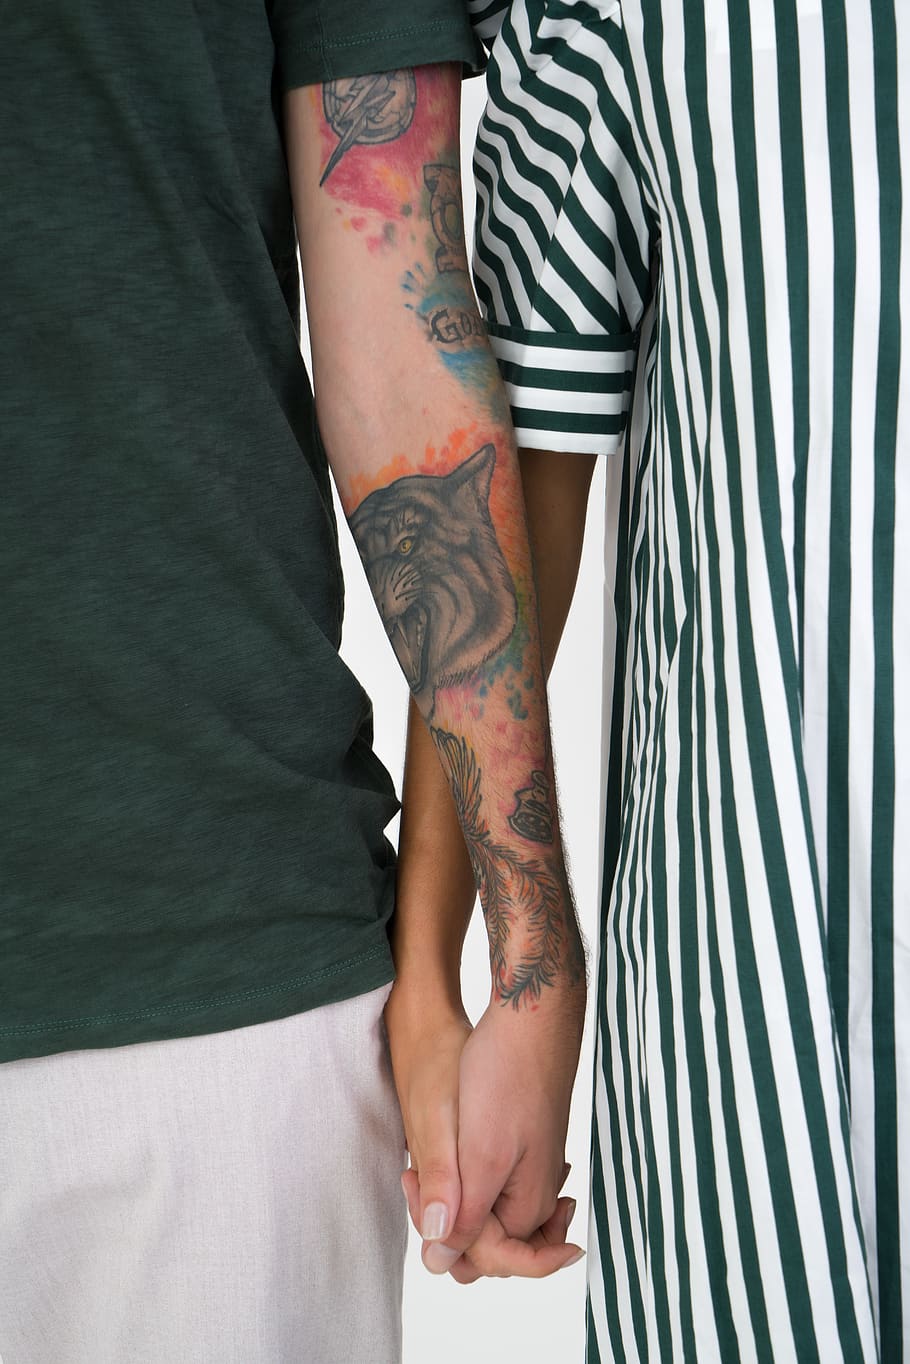 Pasangan, berpegangan tangan, tato, pasangan muda, tanpa wajah, cinta, pacar, pria, wanita, orang